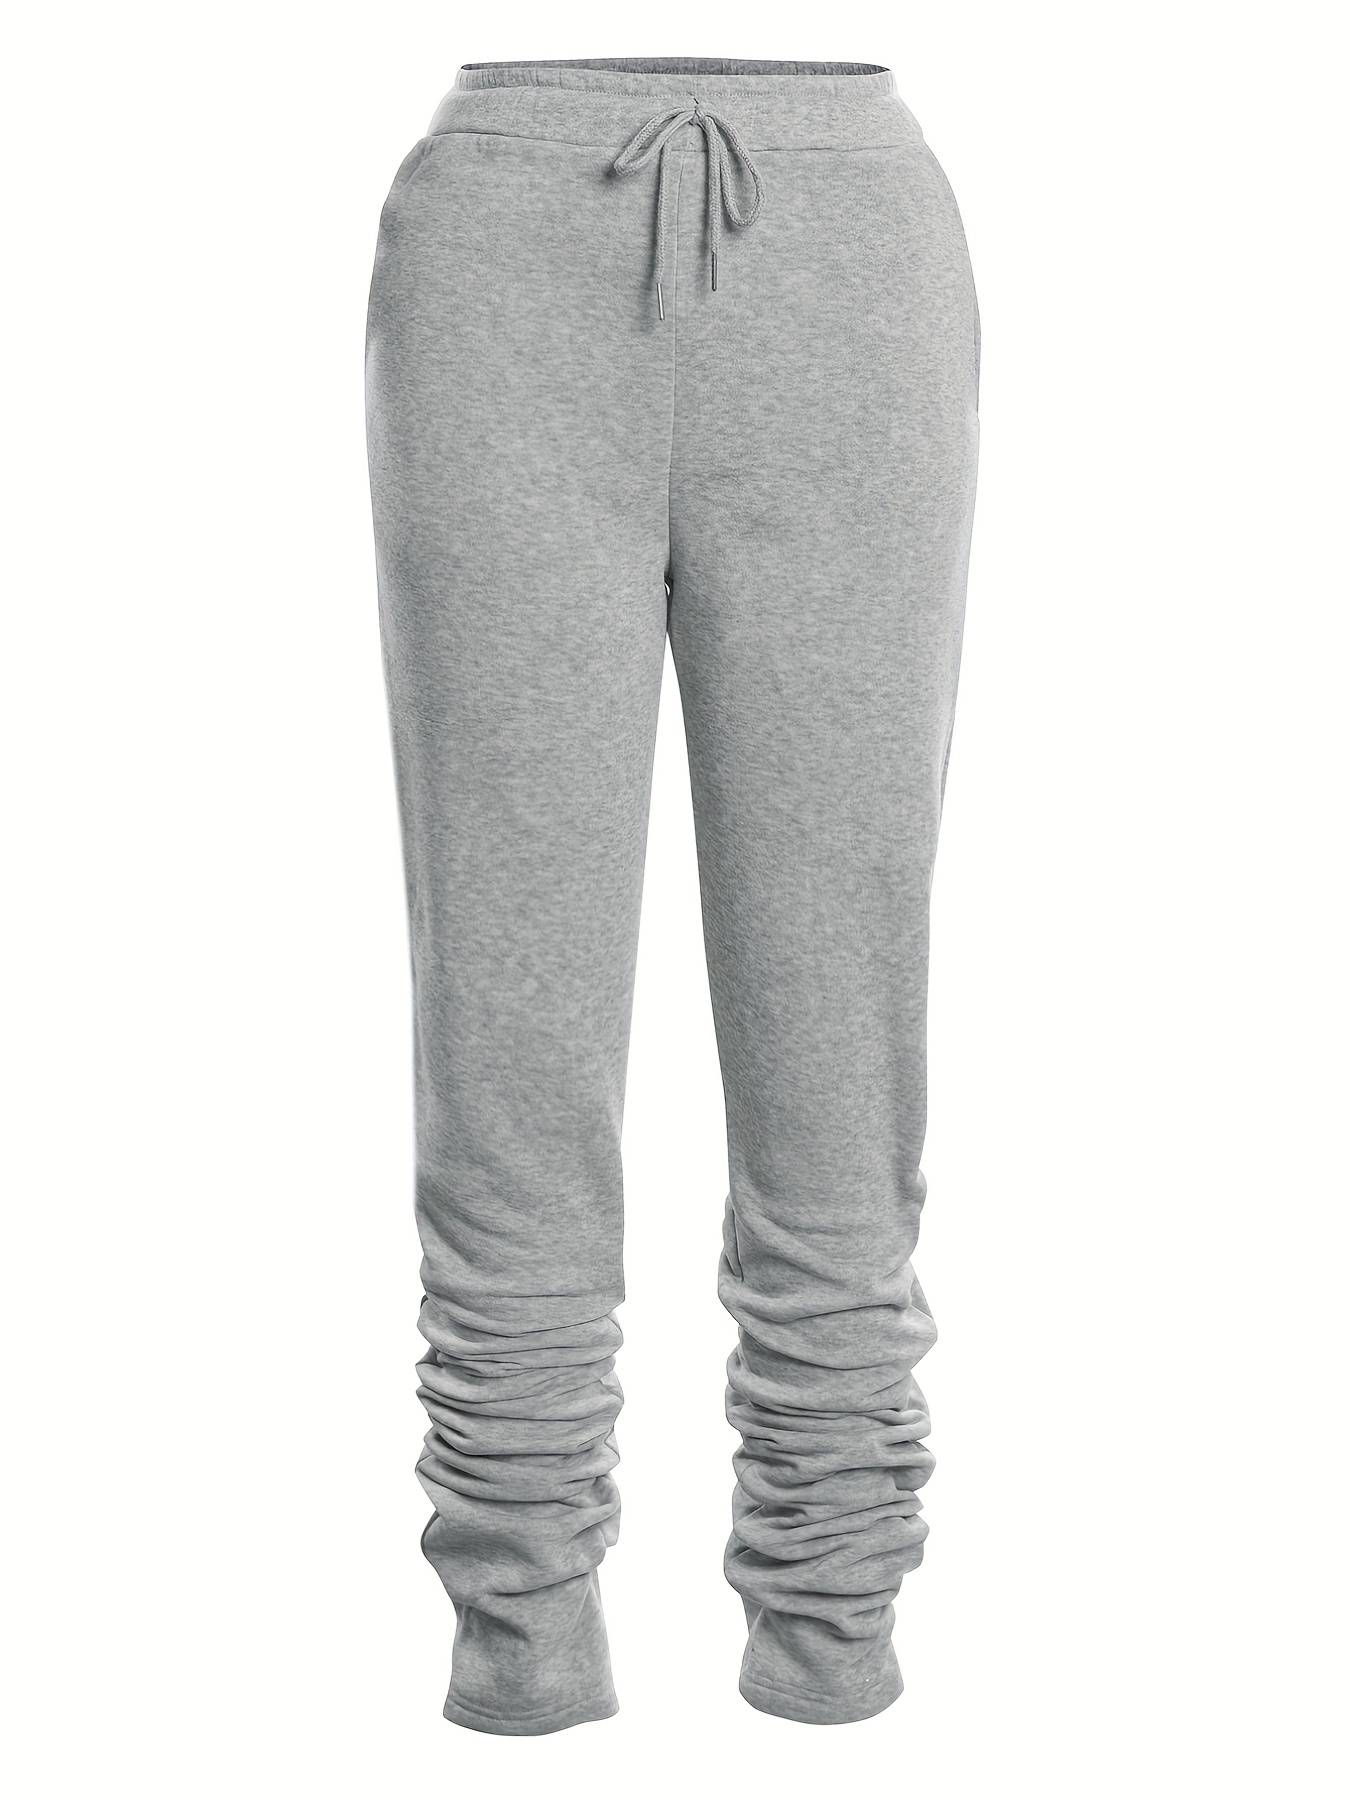 Fashion （gray）Stacked Sweatpants Women's Fleece Thick Sports